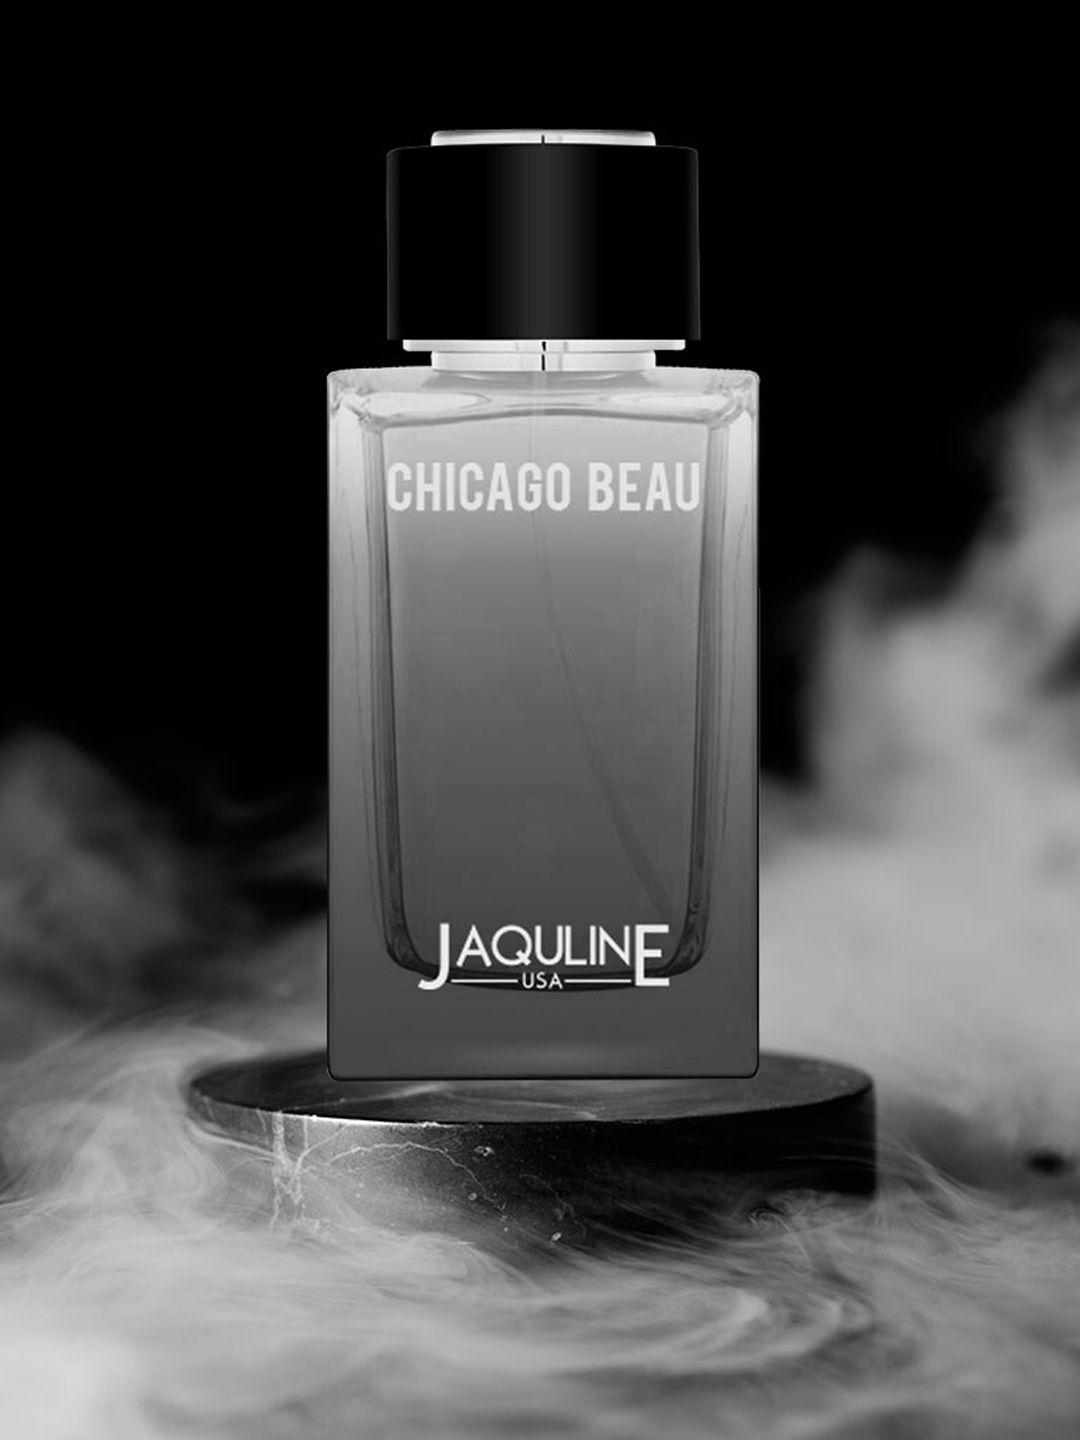 jaquline usa fine fragrances chicago beau edp 100ml